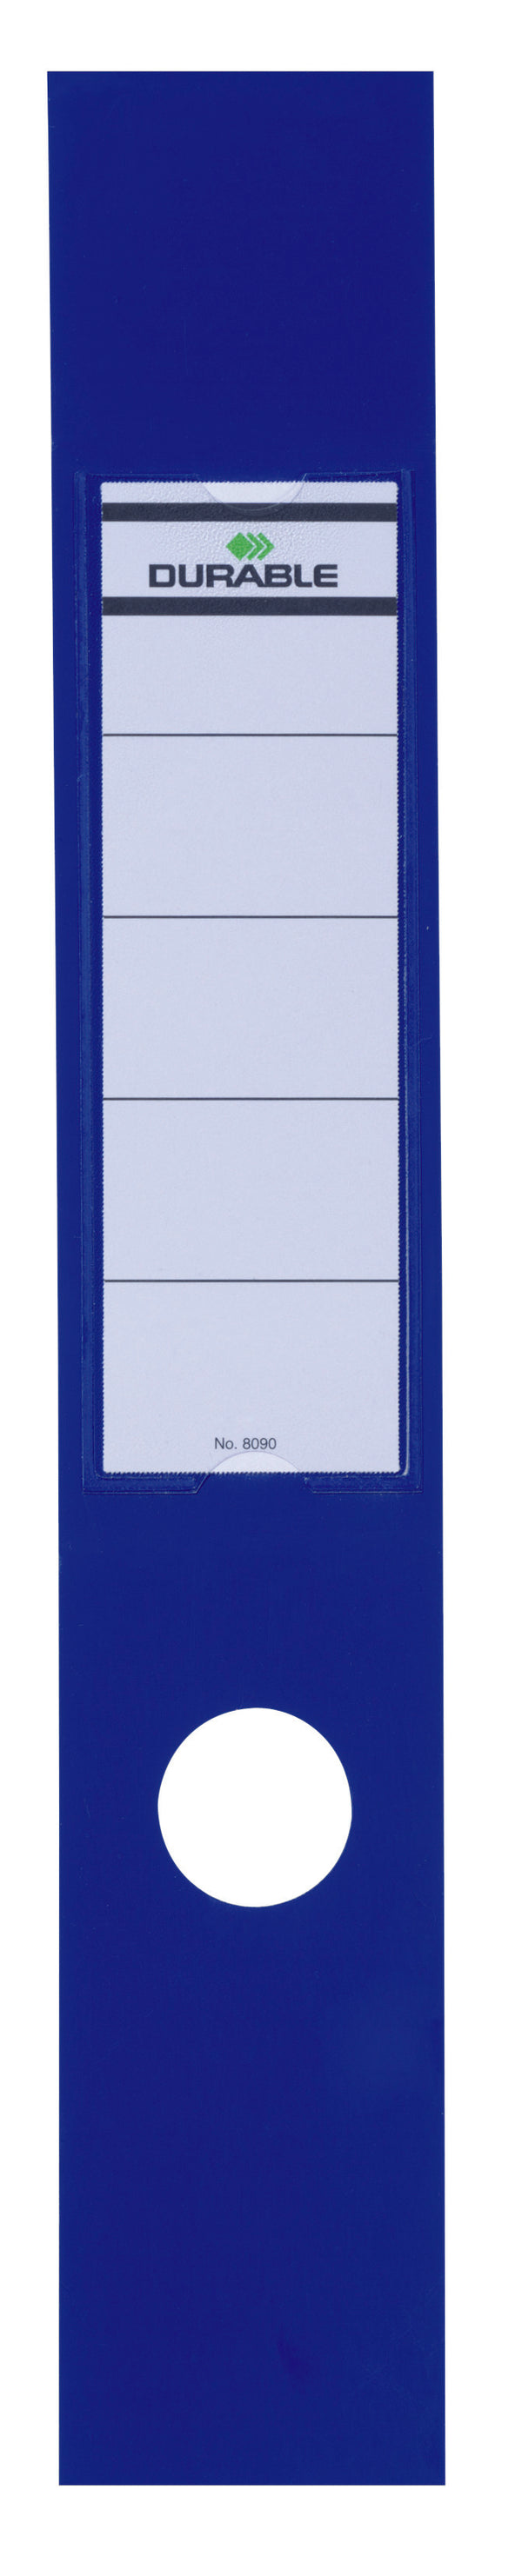 Durable Ordofix Lever Arch File Spine Label PVC 60x390mm Blue (Pack 10) 809006 - UK BUSINESS SUPPLIES